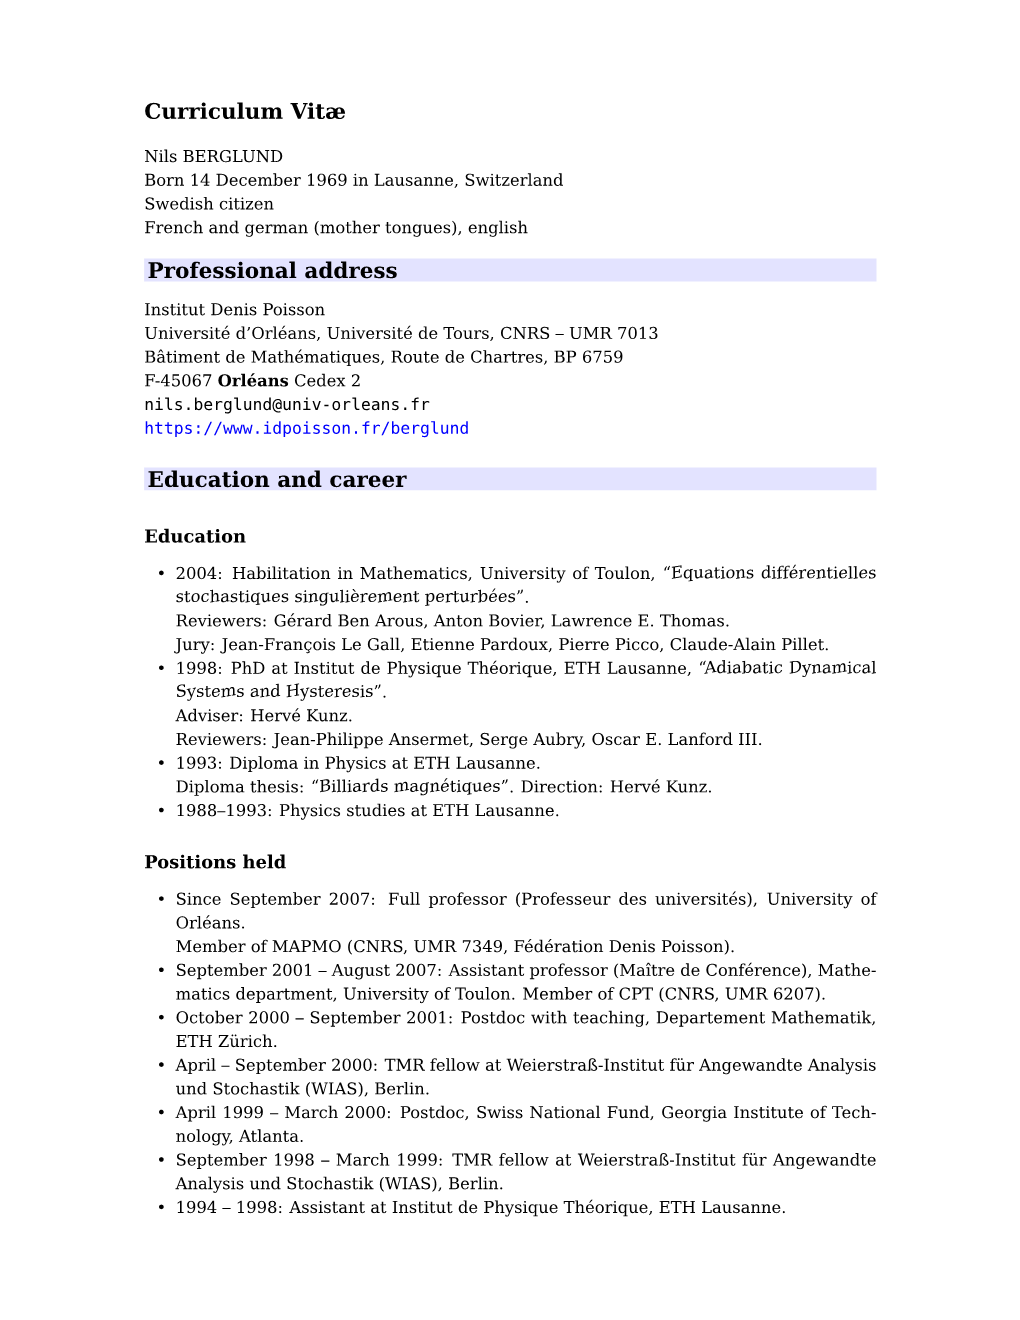 Curriculum Vitæ Professional Address Education and Career